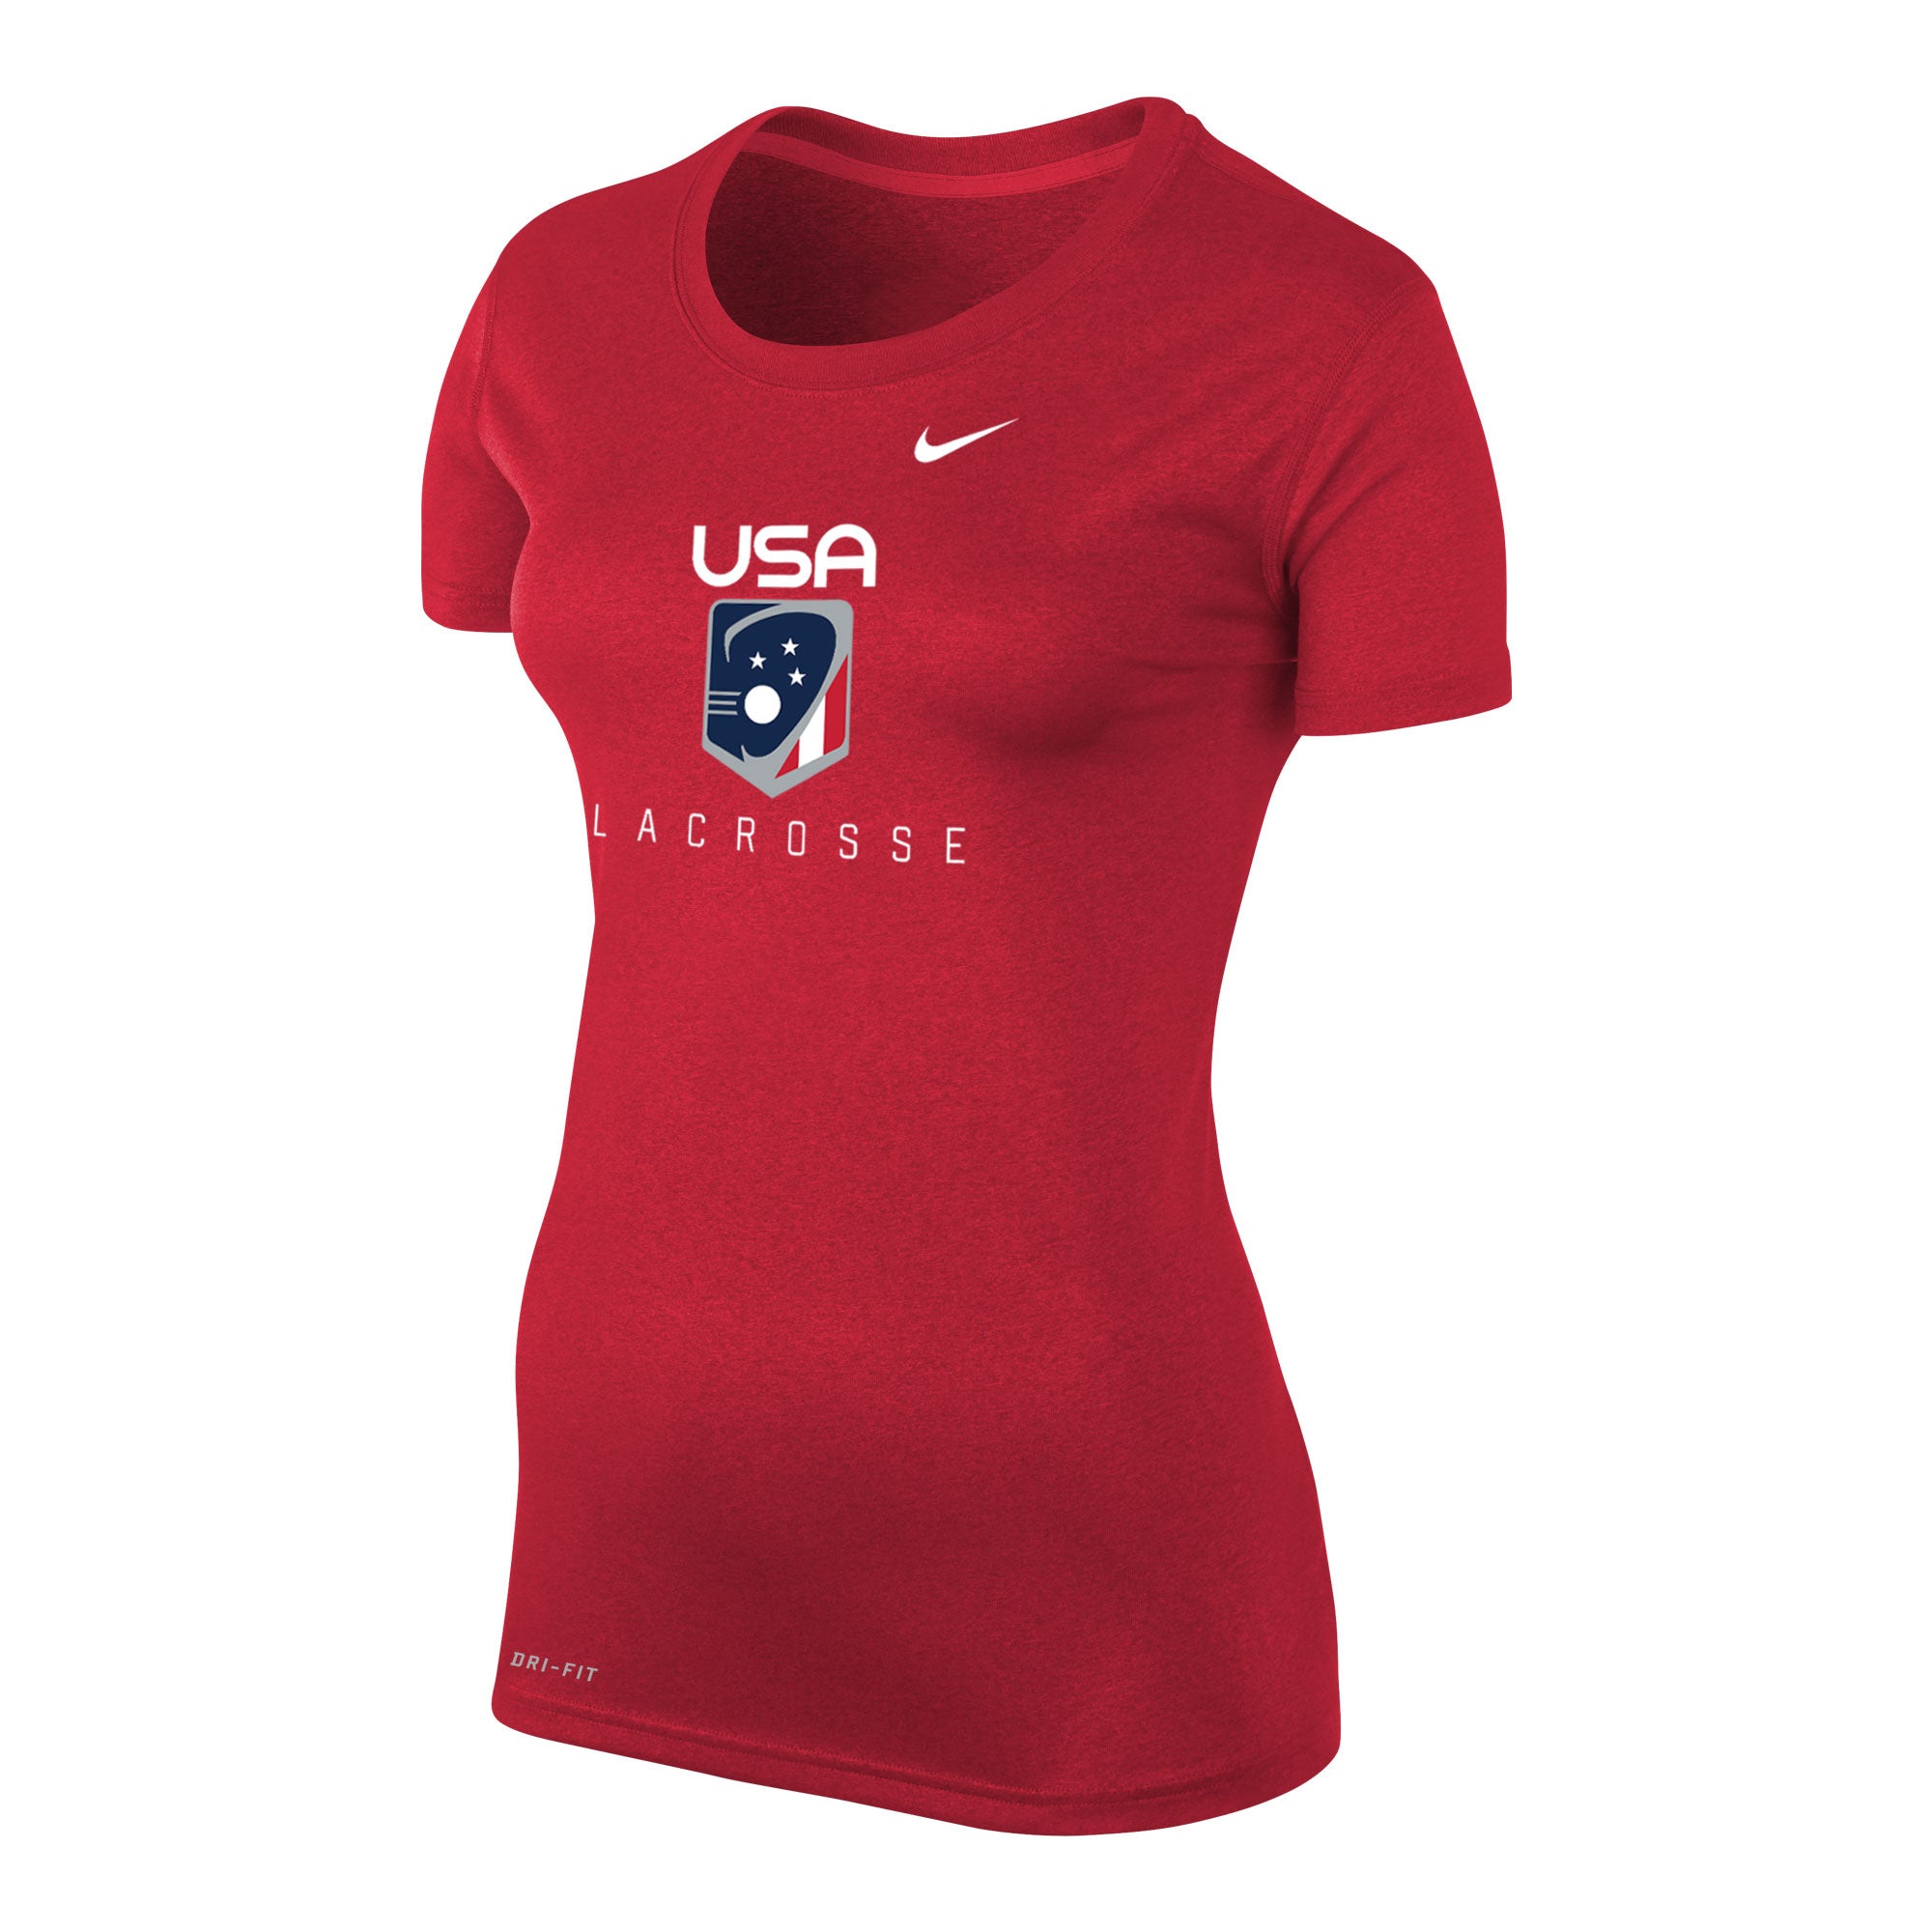 FINAL SALE - Women's USA Nike Dri-FIT Legend Short Sleeve Tee